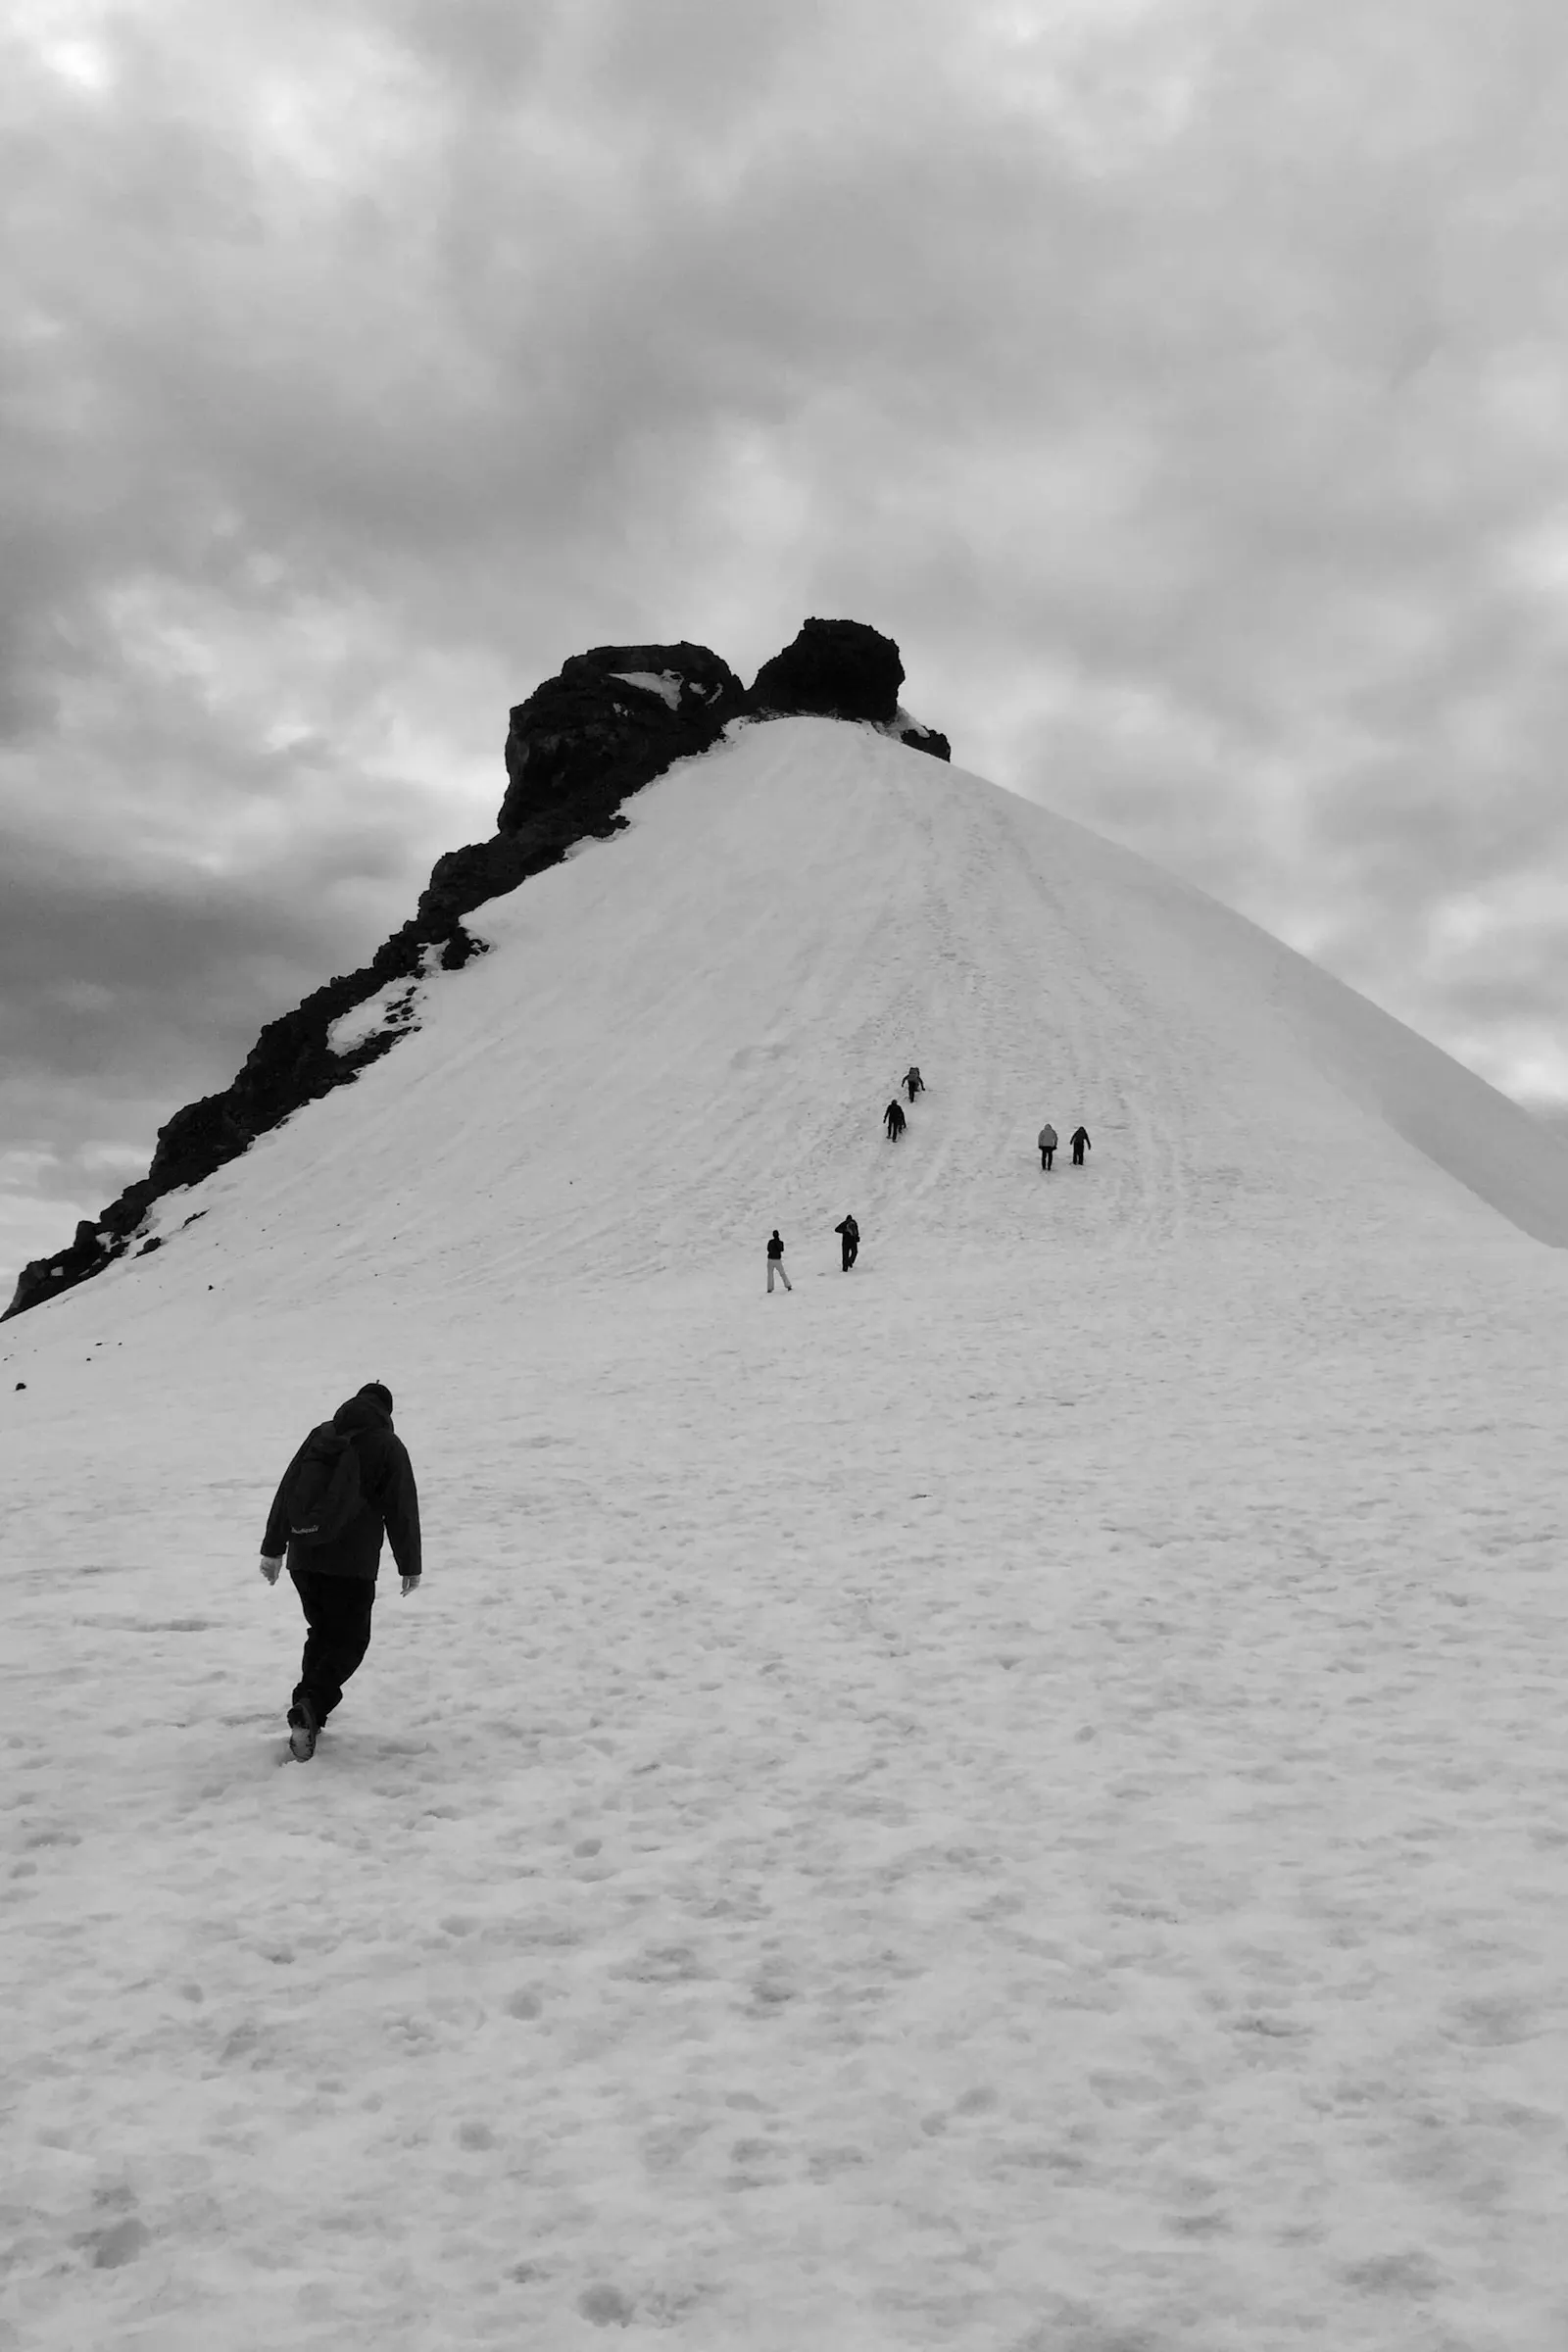 A group of people are walking up to the peak of Snæfellsjökull